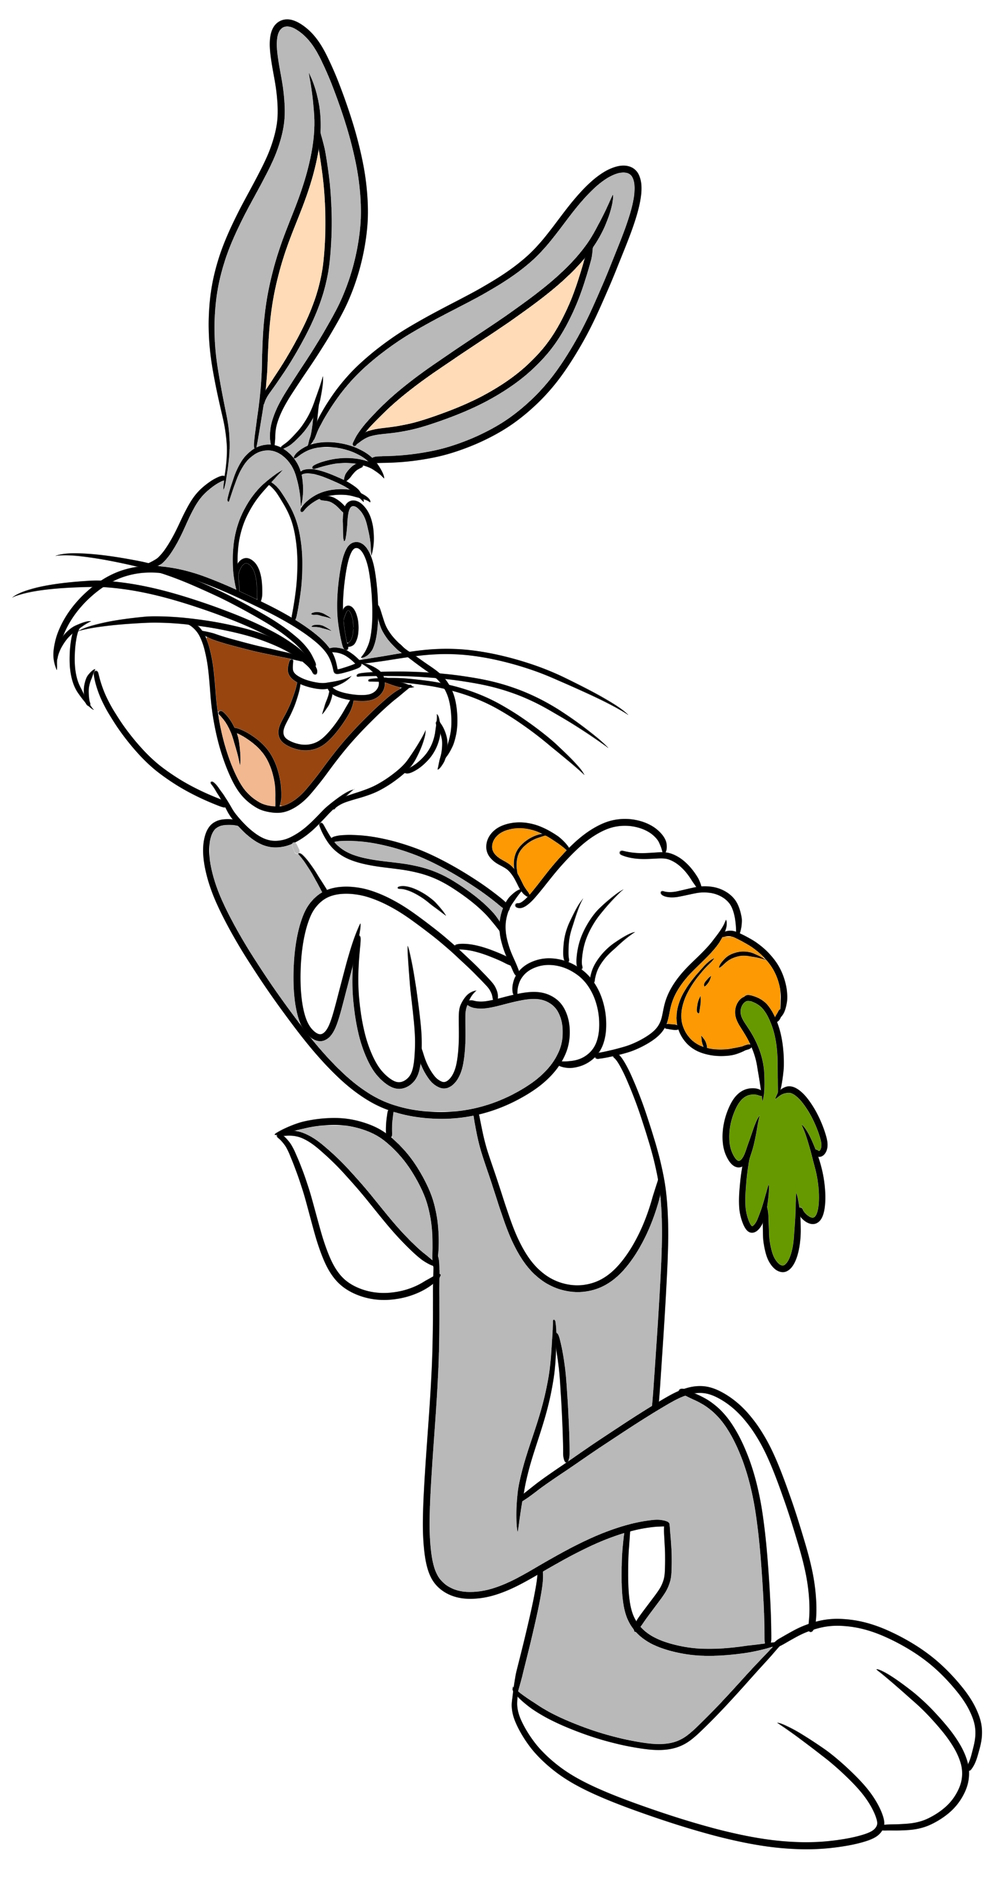 Bugs Bunny Weathering with You 2020  Idea Wiki  Fandom